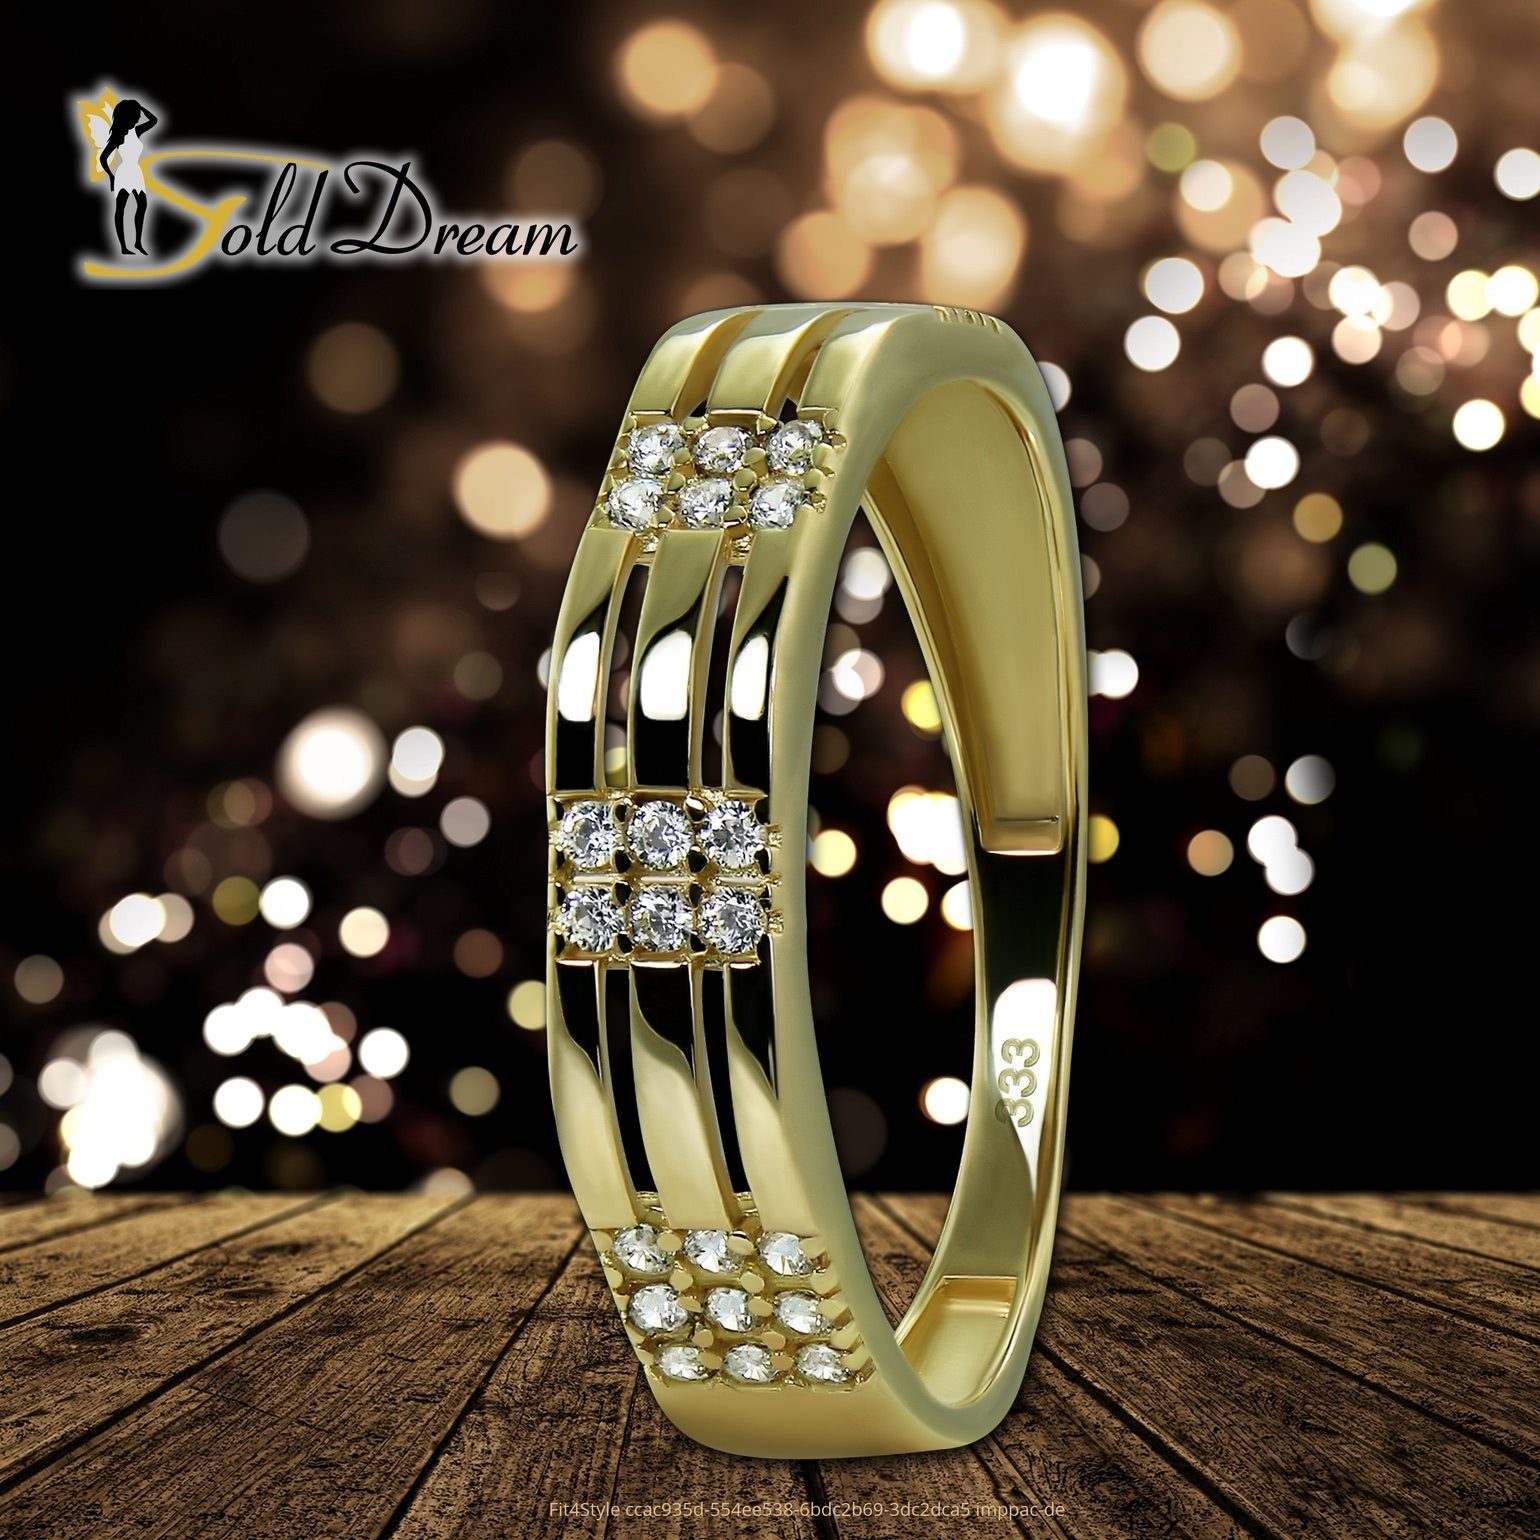 Goldring Gelbgold GoldDream Sparkle Karat, GoldDream 8 - gold, Sparkle weiß Ring 333 Farbe: (Fingerring), Gold Damen Ring Gr.58